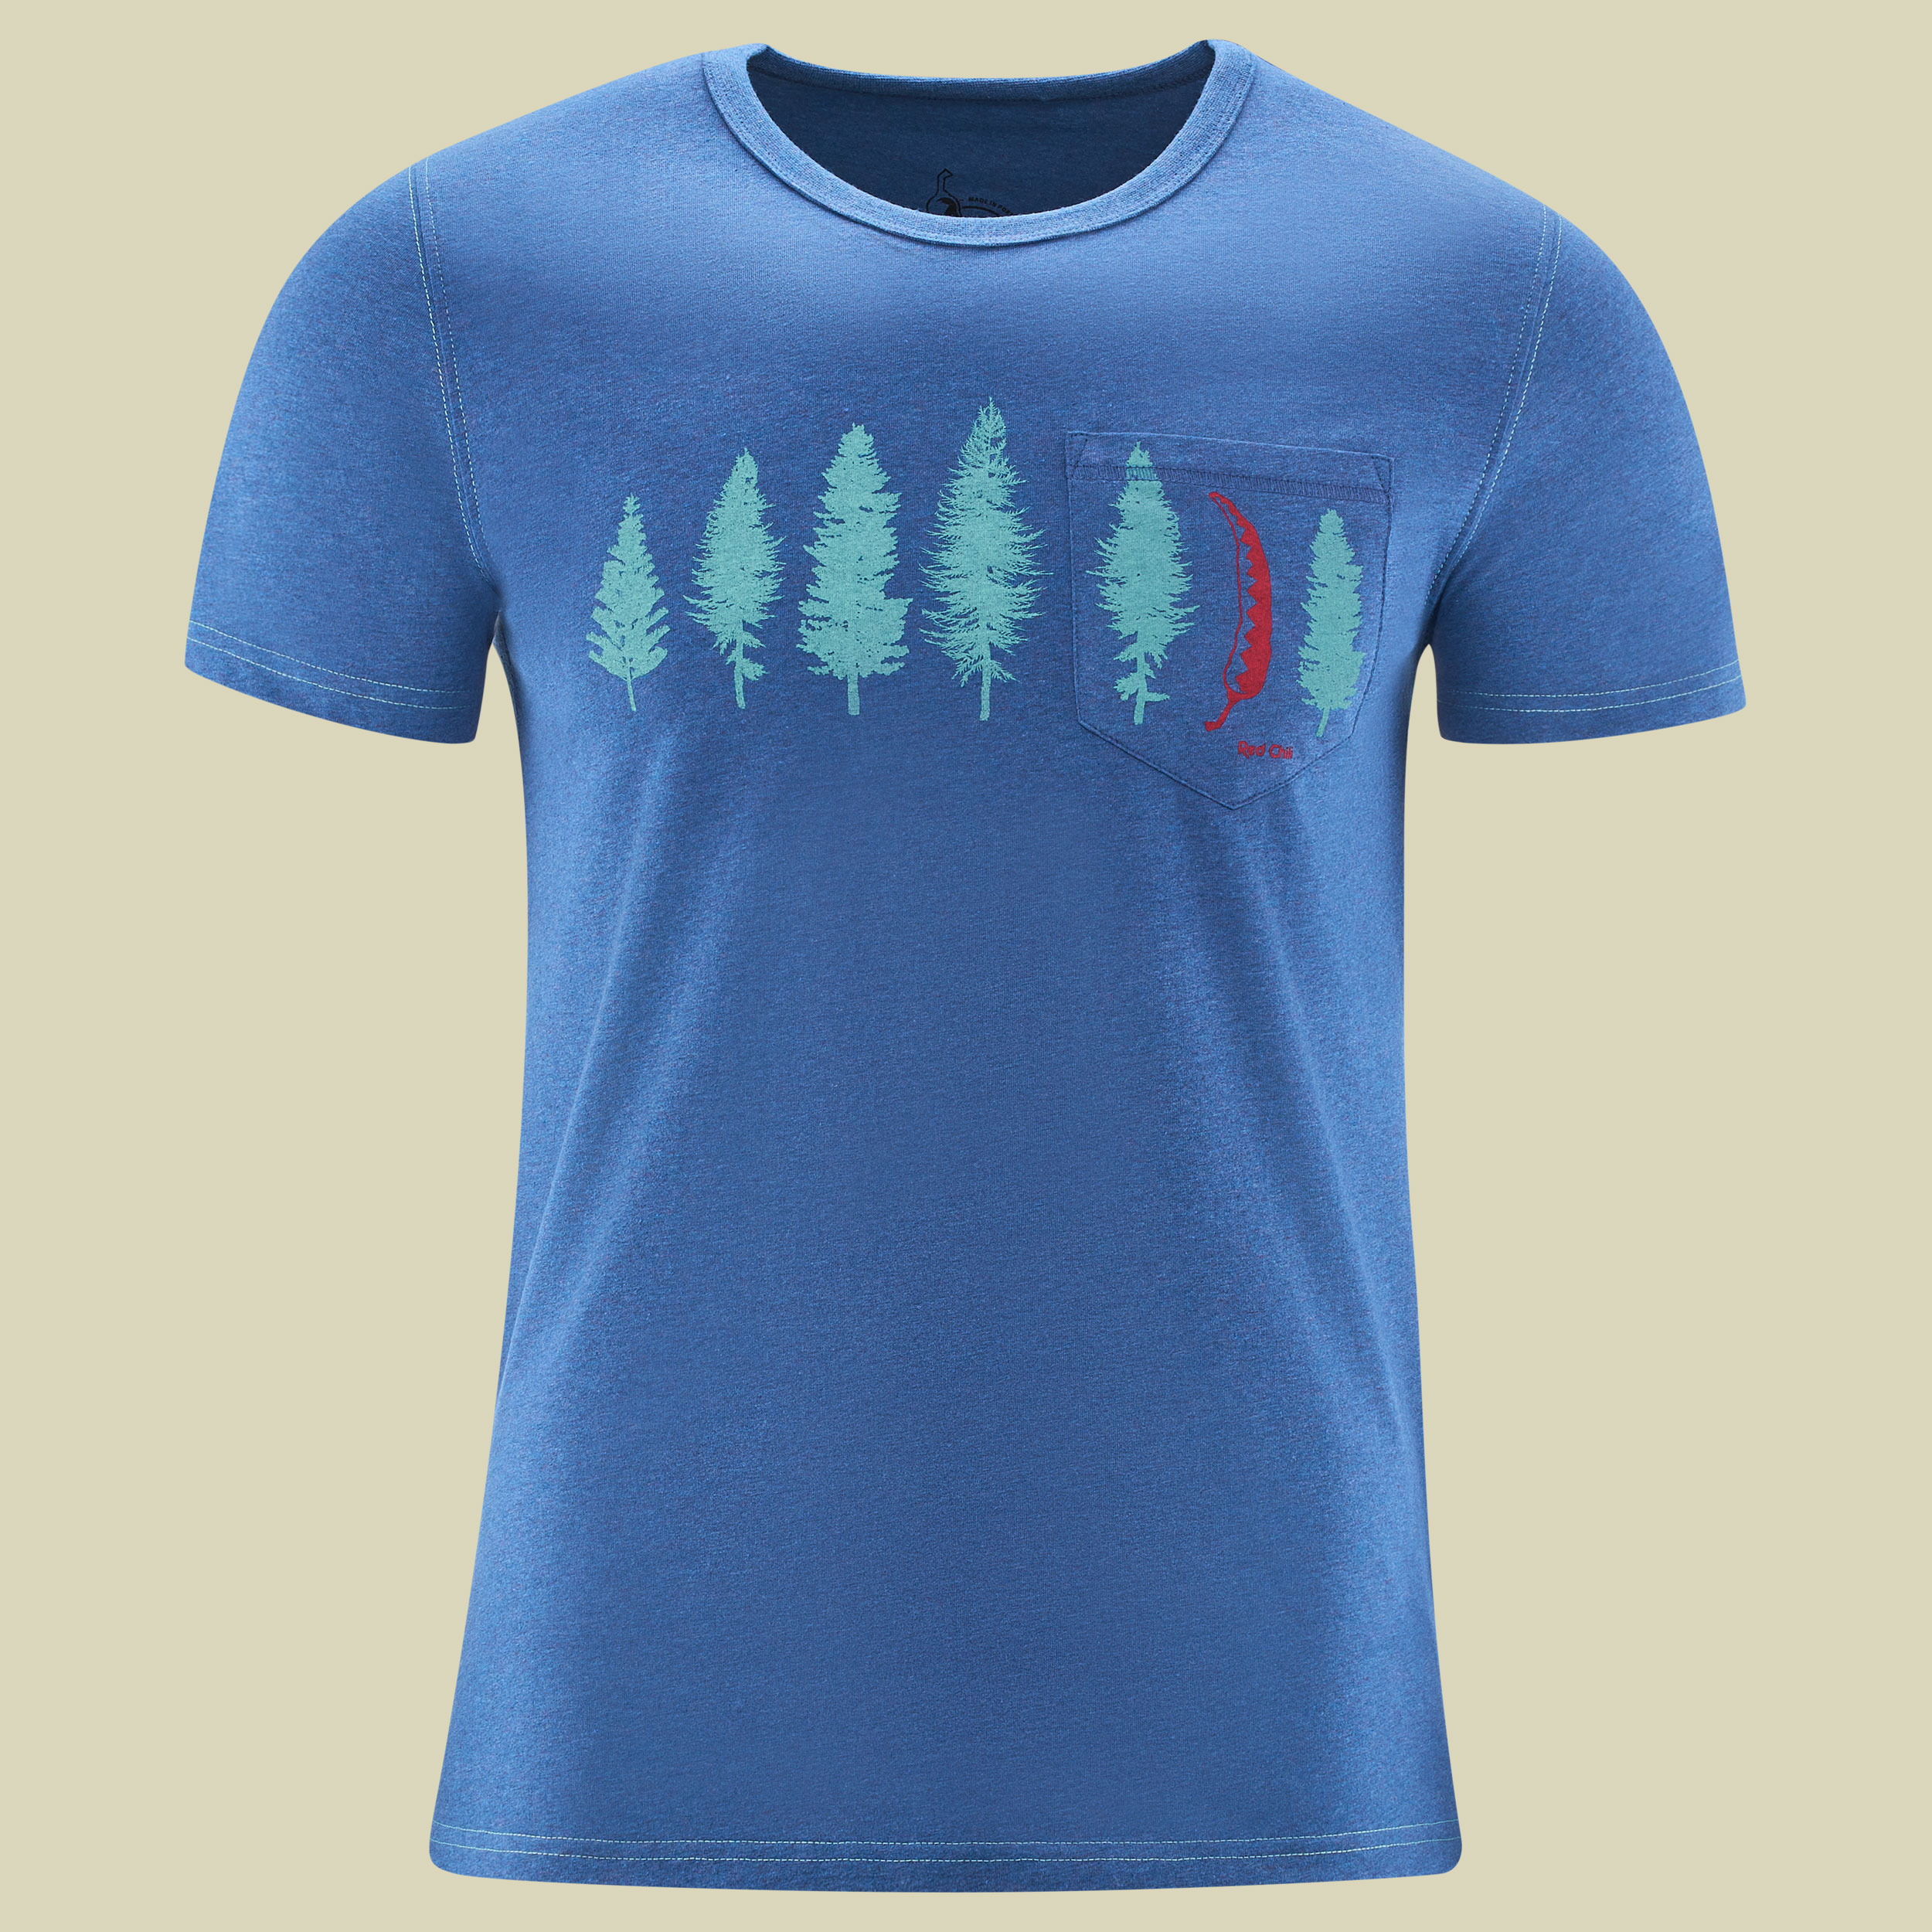 Heso T-Shirt III Men Größe S Farbe bluegrey